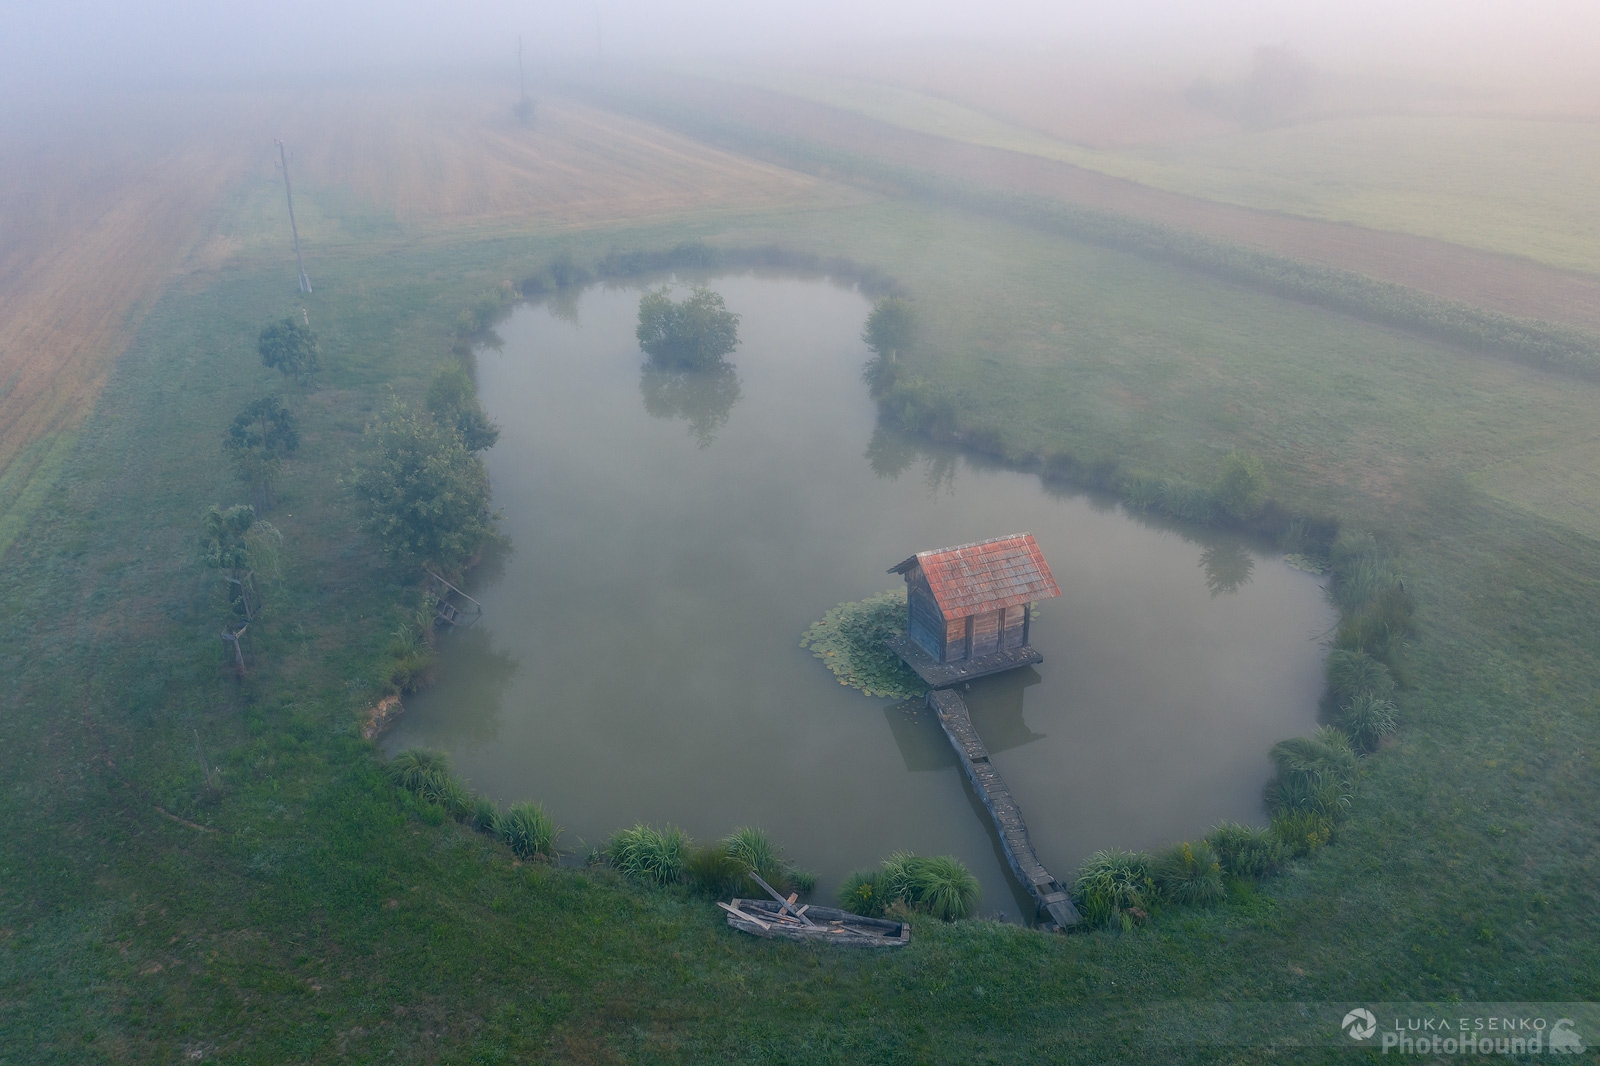 Image of Griblje Fish Pond by Luka Esenko